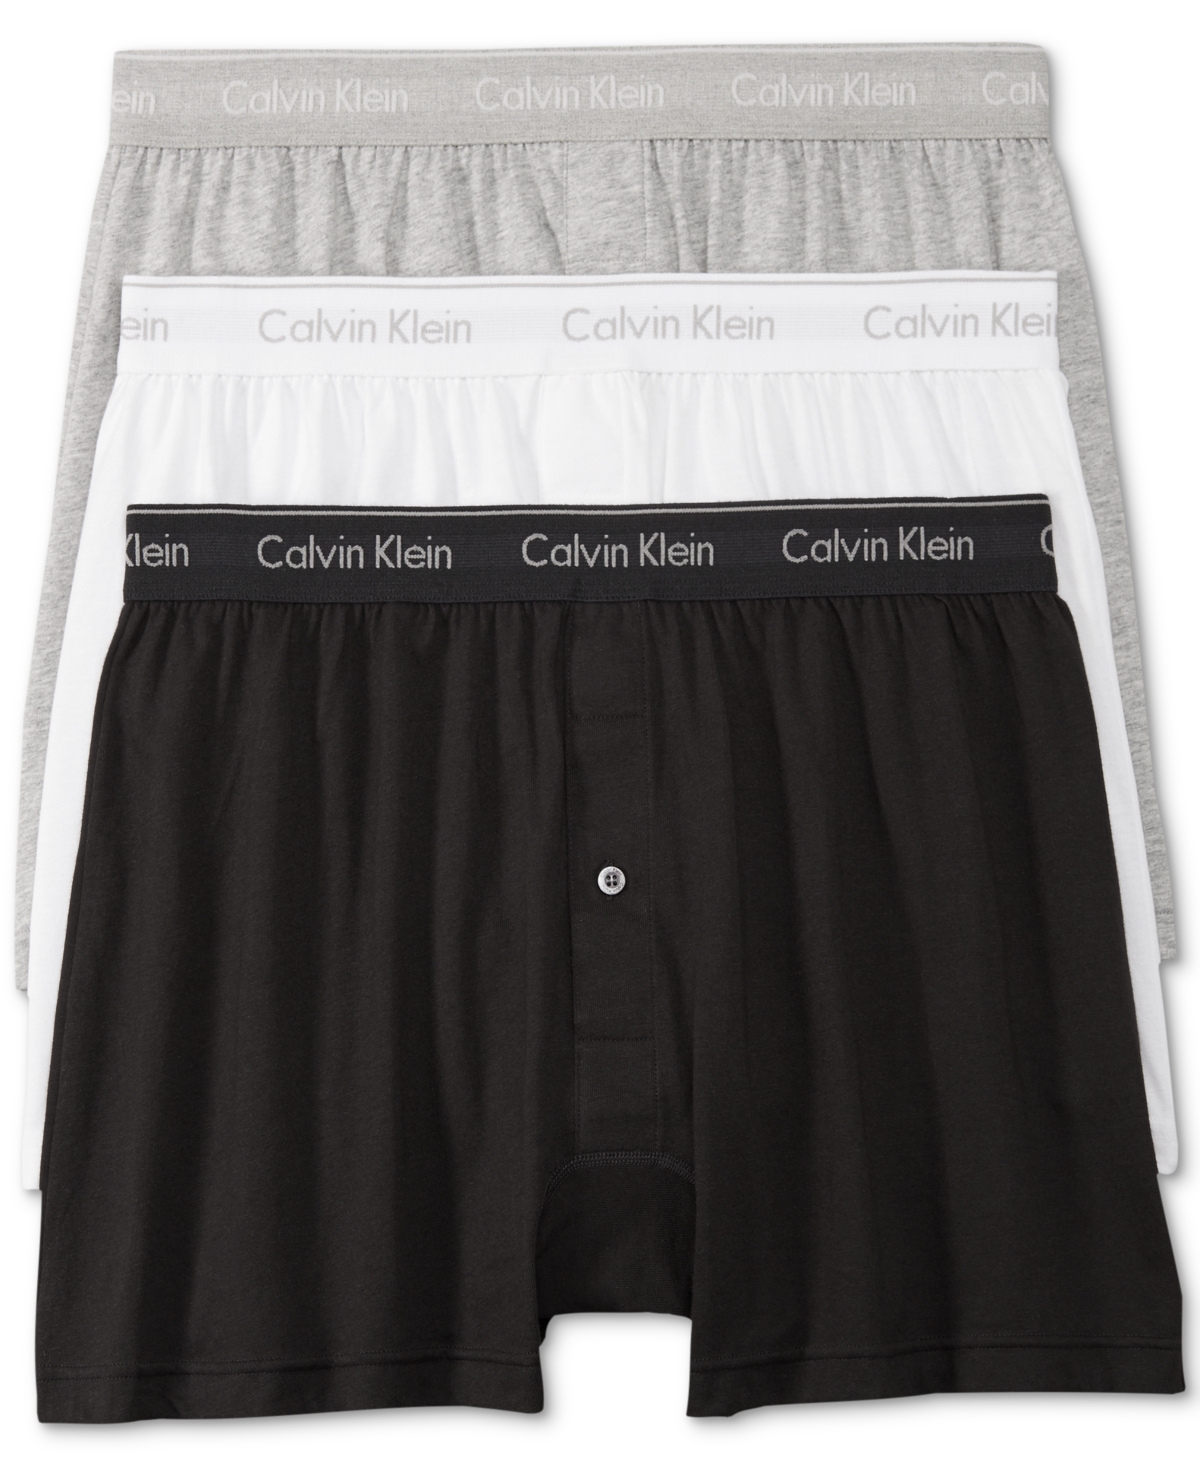 Calvin Klein Men's 3-pack Cotton Classics Knit Boxers Underwear In Black,white,grey